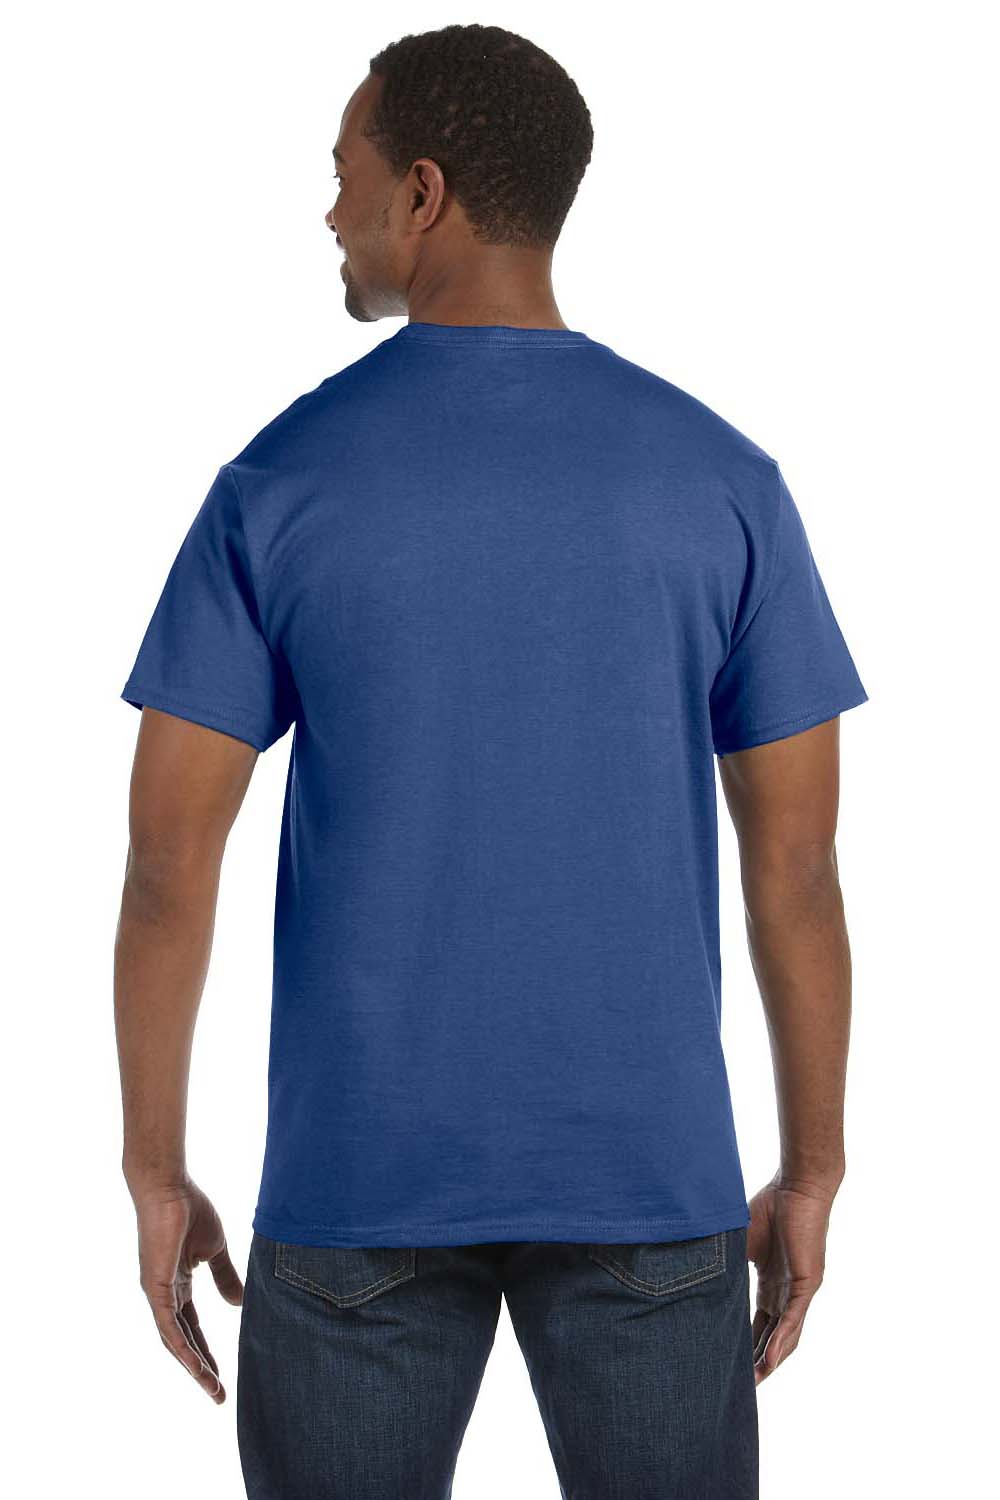 Jerzees 29M Mens Dri-Power Moisture Wicking Short Sleeve Crewneck T-Shirt Heather Blue Back